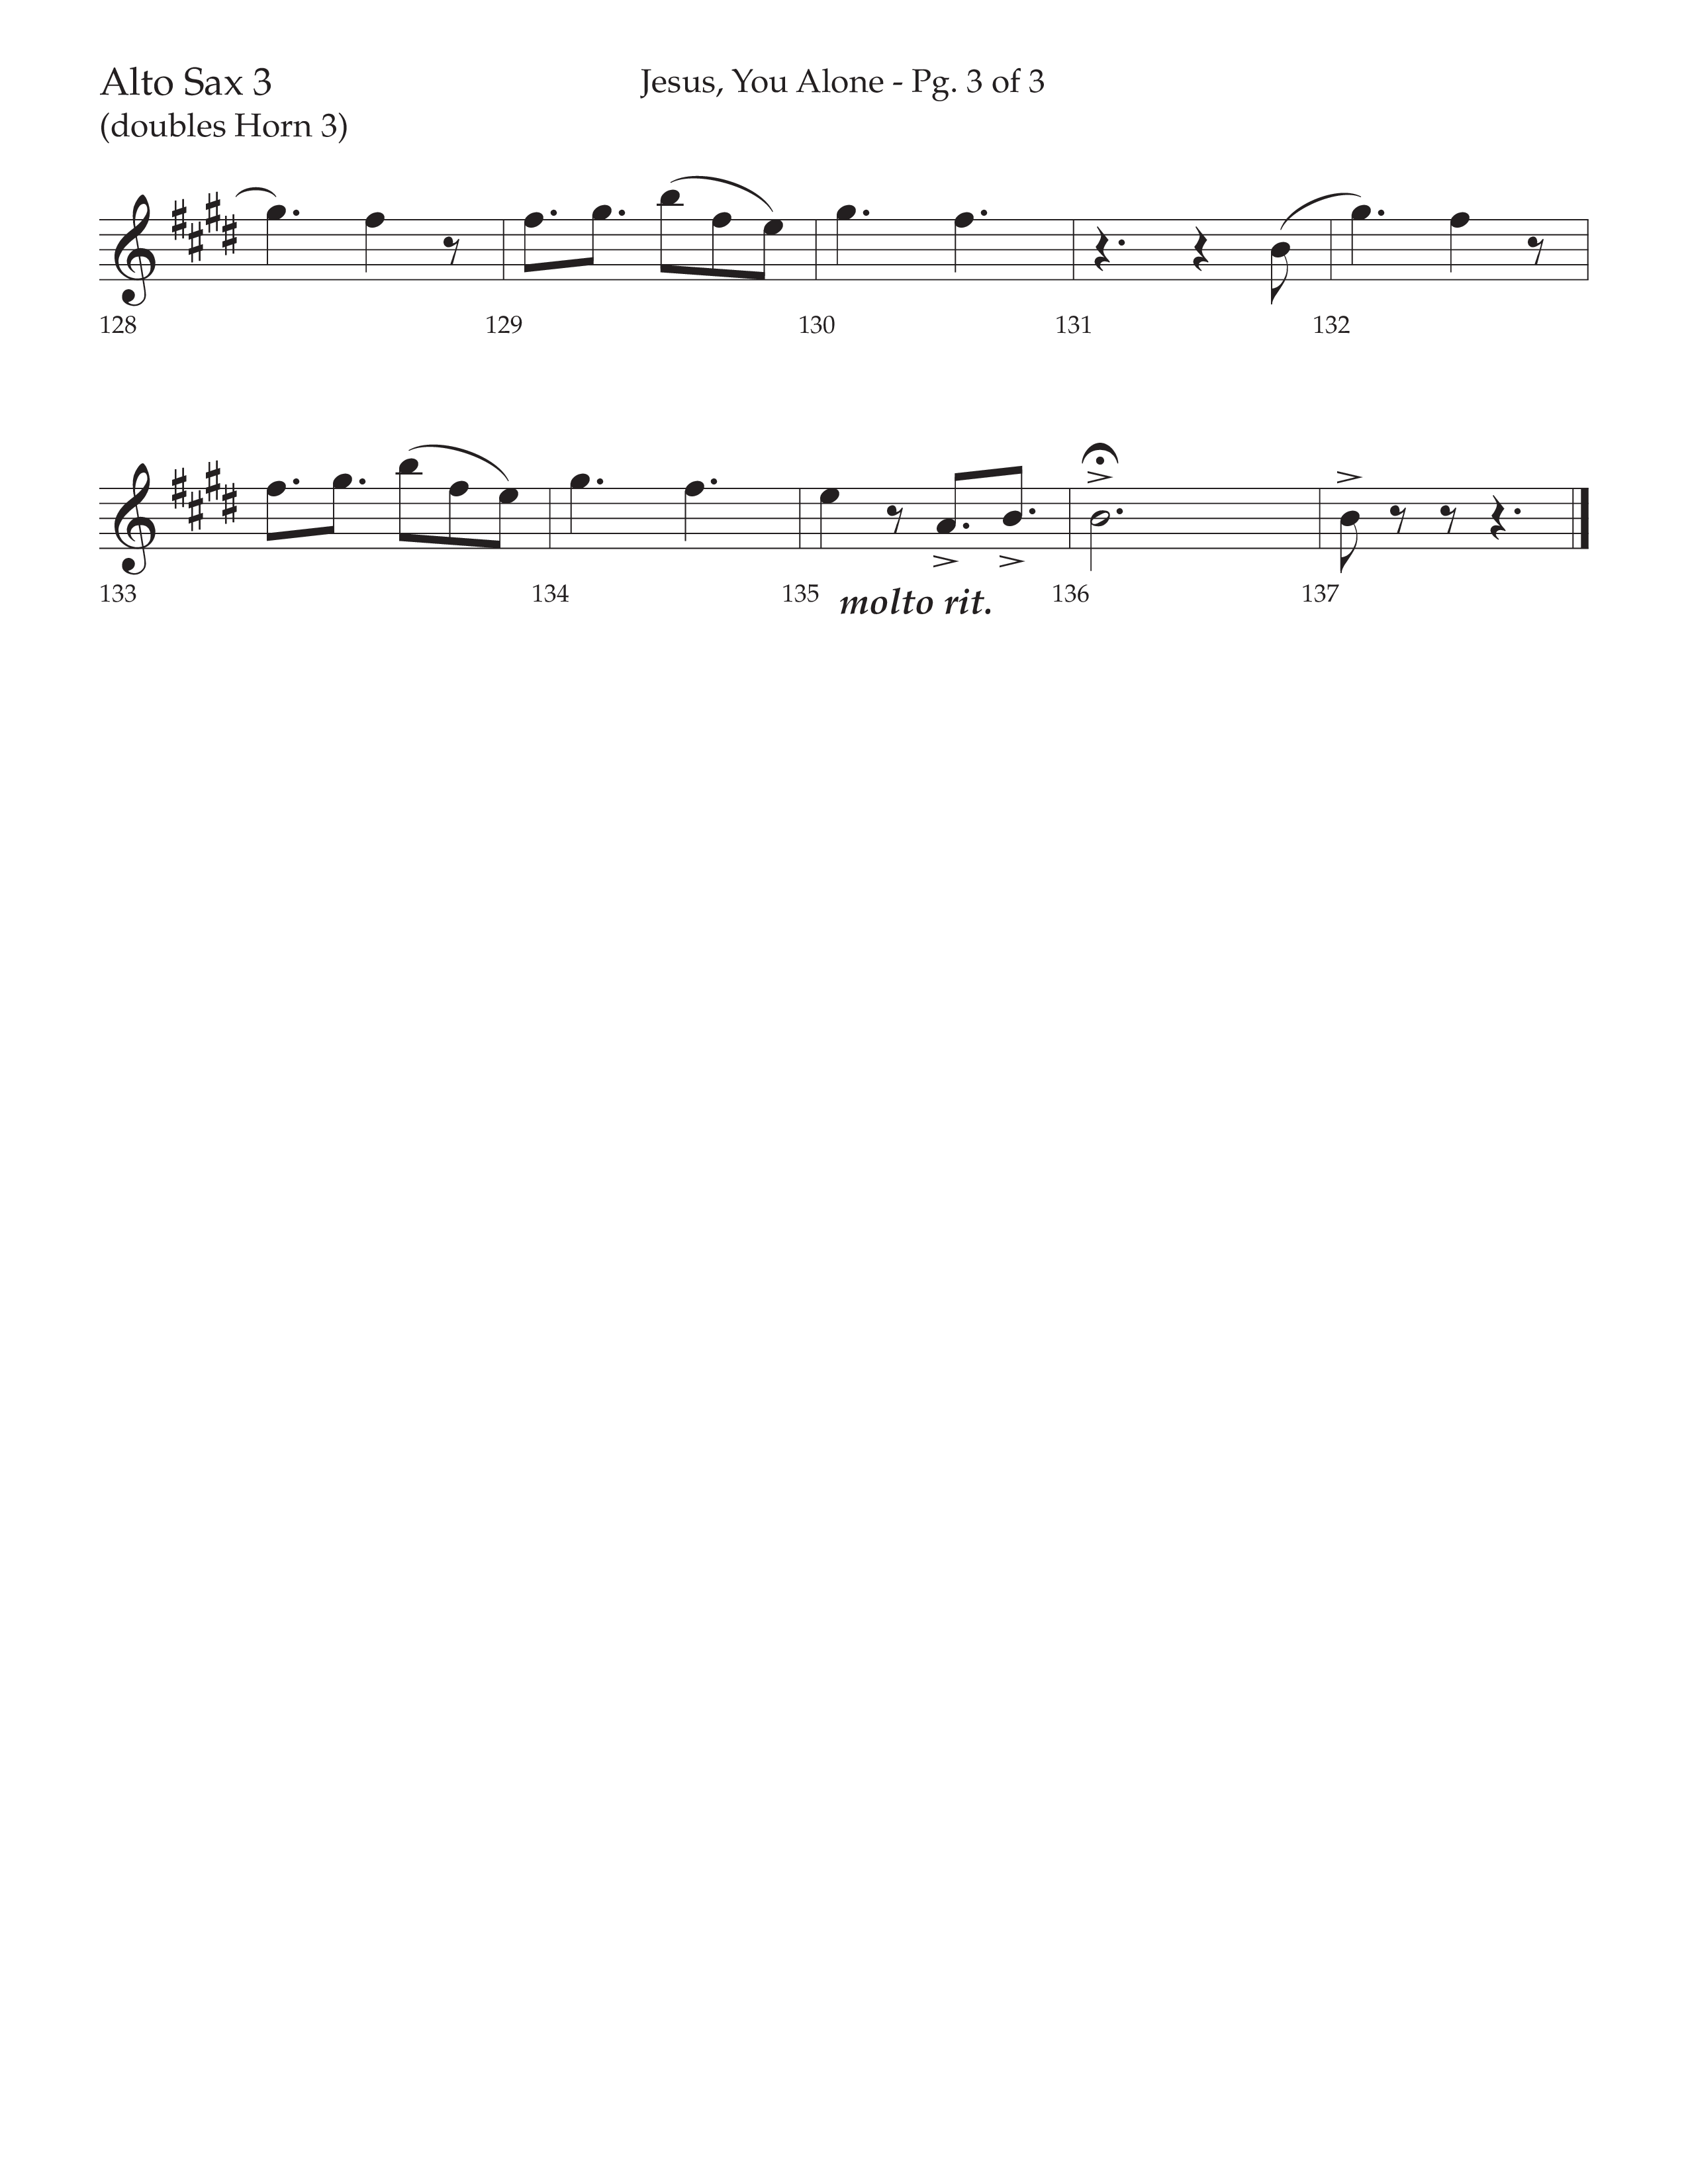 Jesus You Alone (Choral Anthem SATB) Alto Sax (Lifeway Choral / Arr. David Wise / Orch. Bradley Knight)